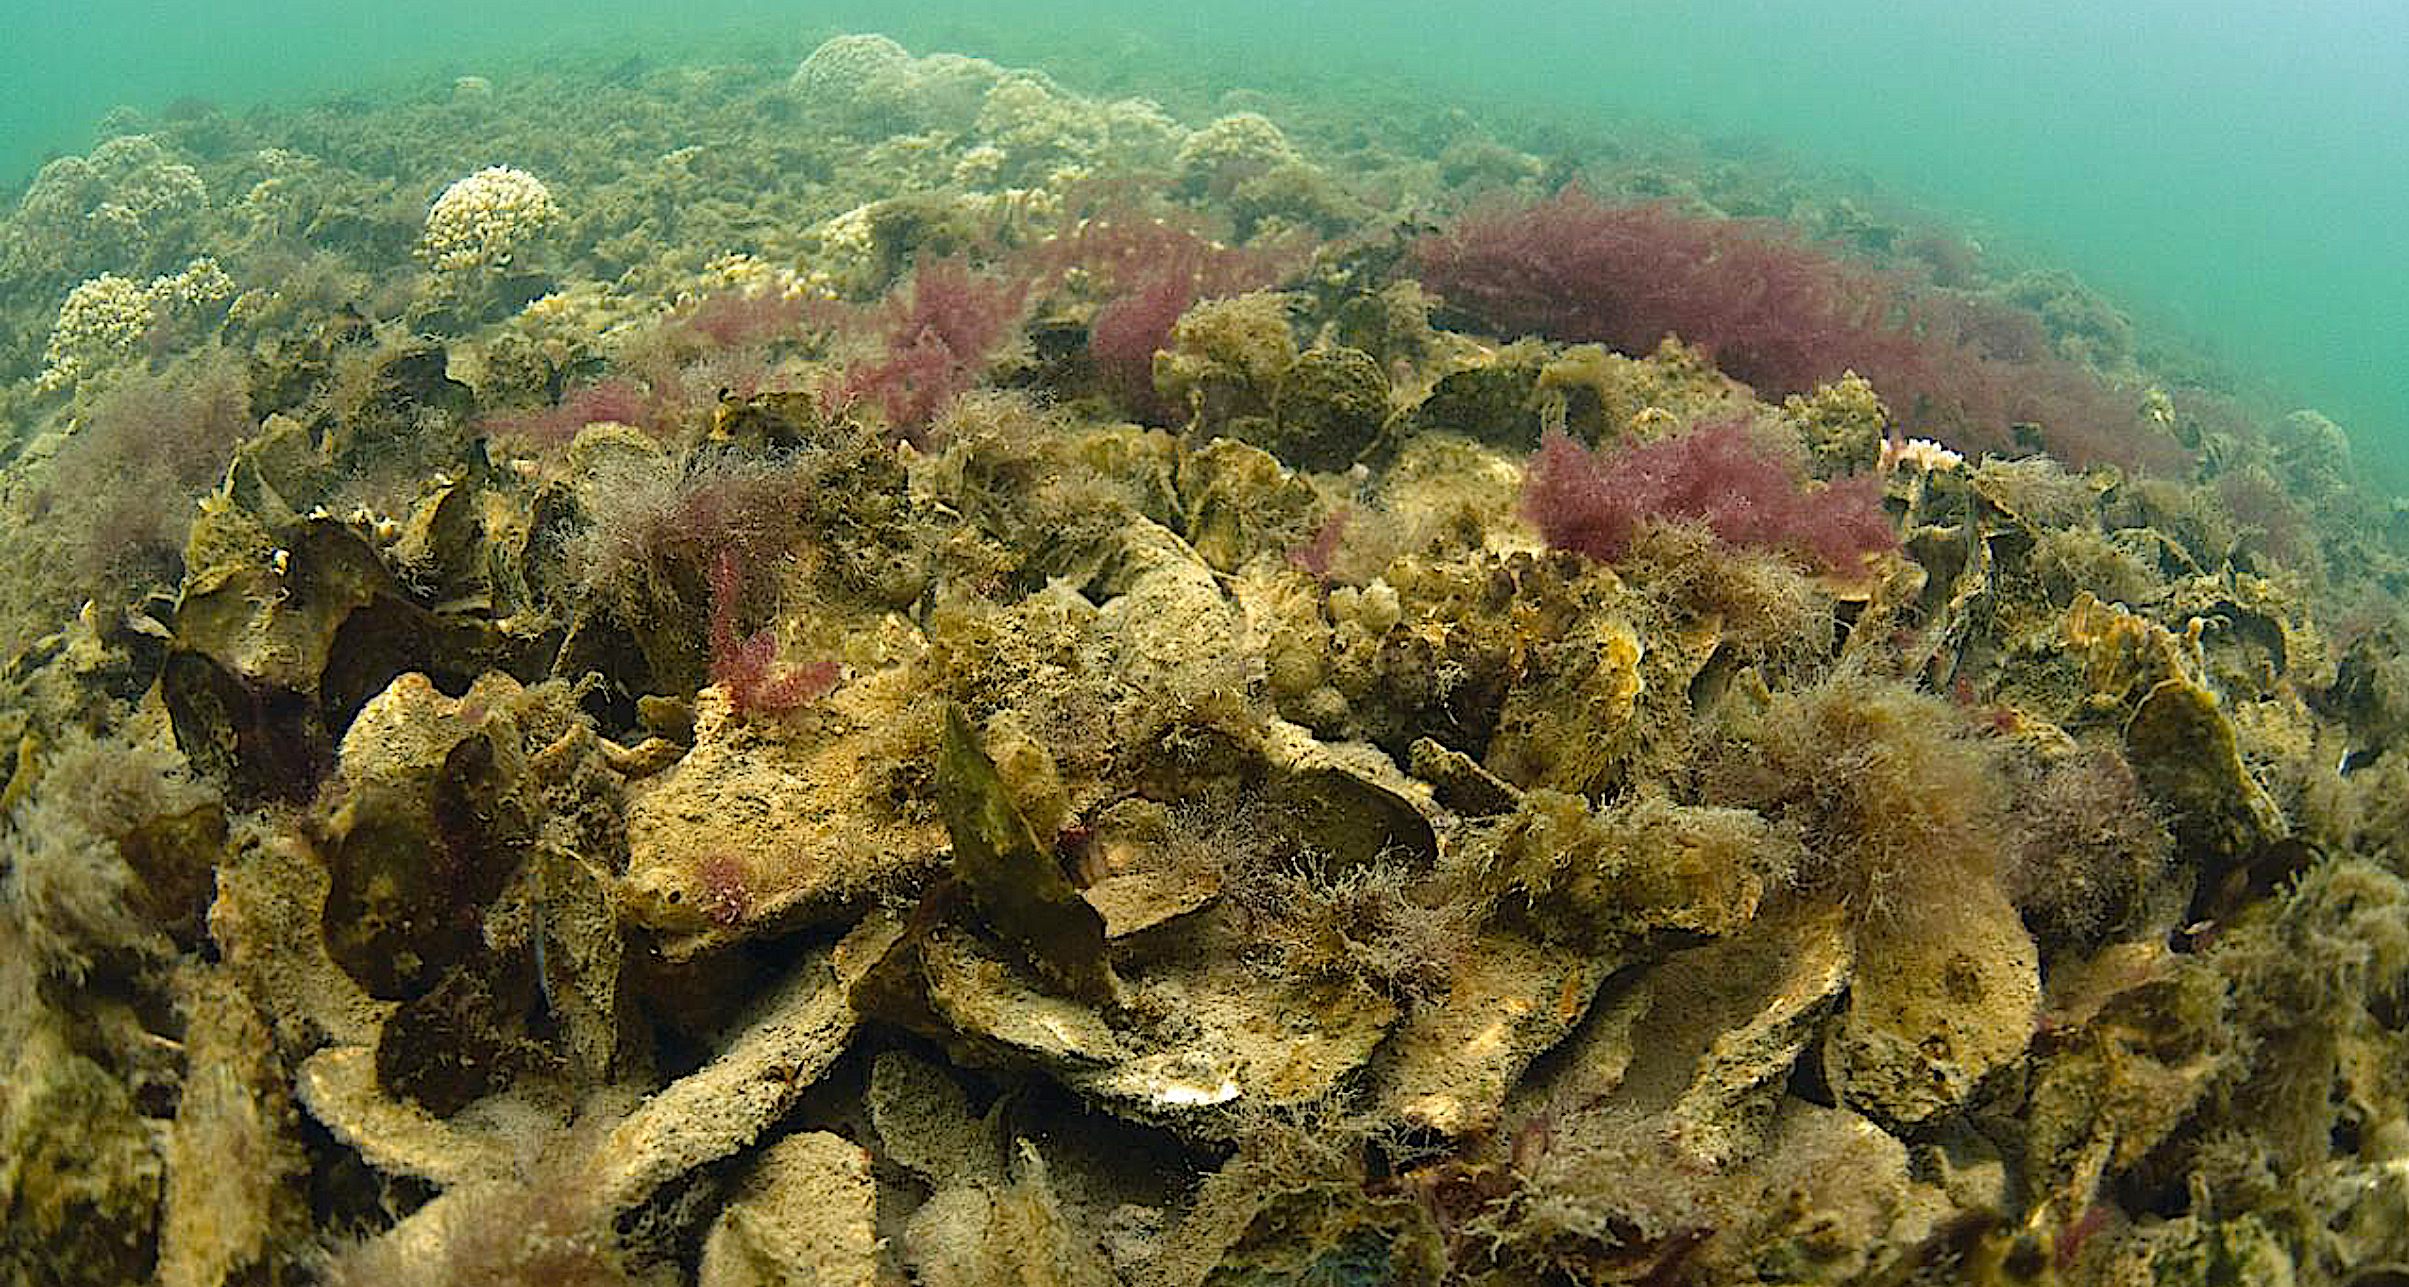 Chesapeake Bay oyster reef image via NOAA